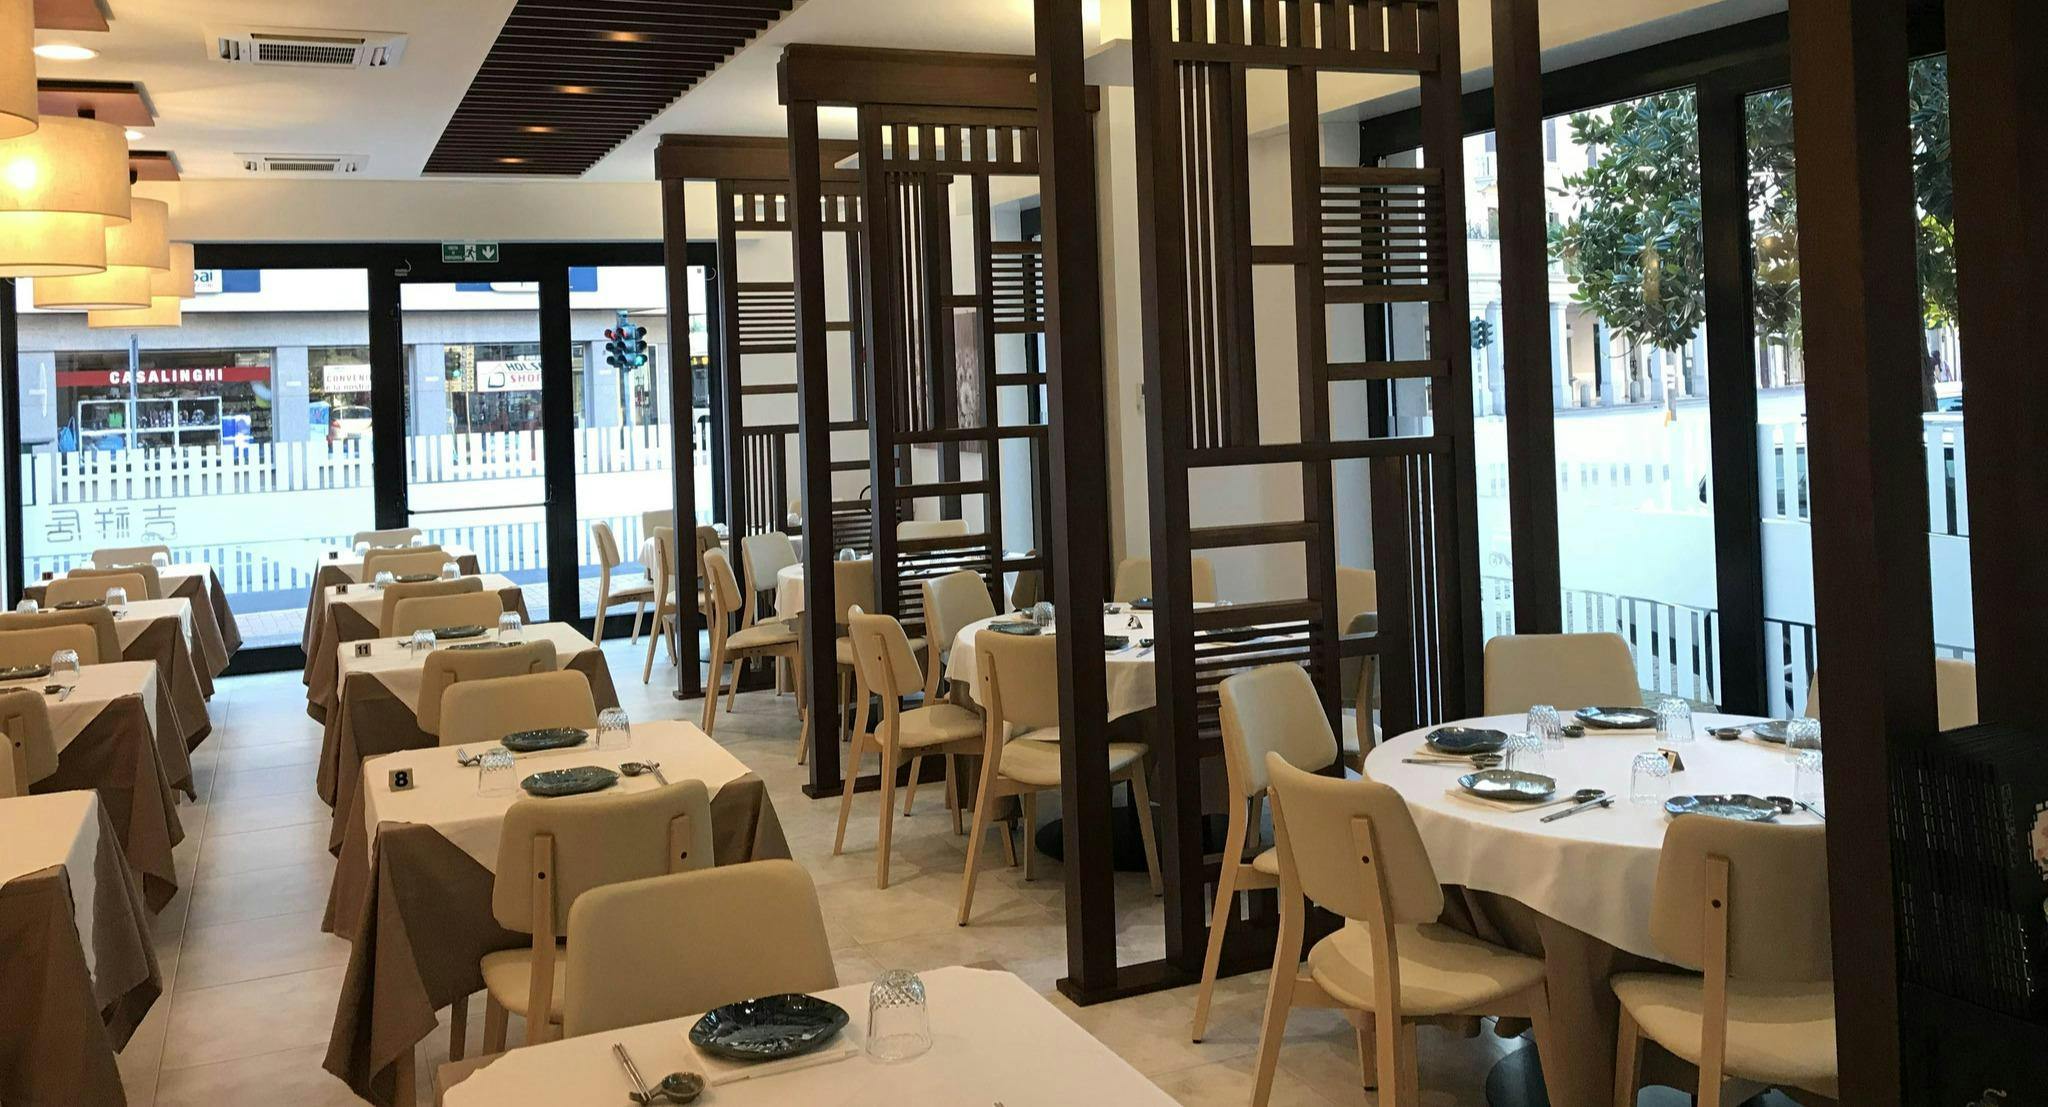 Photo of restaurant Ristorante Jixiang in Mestre, Venice